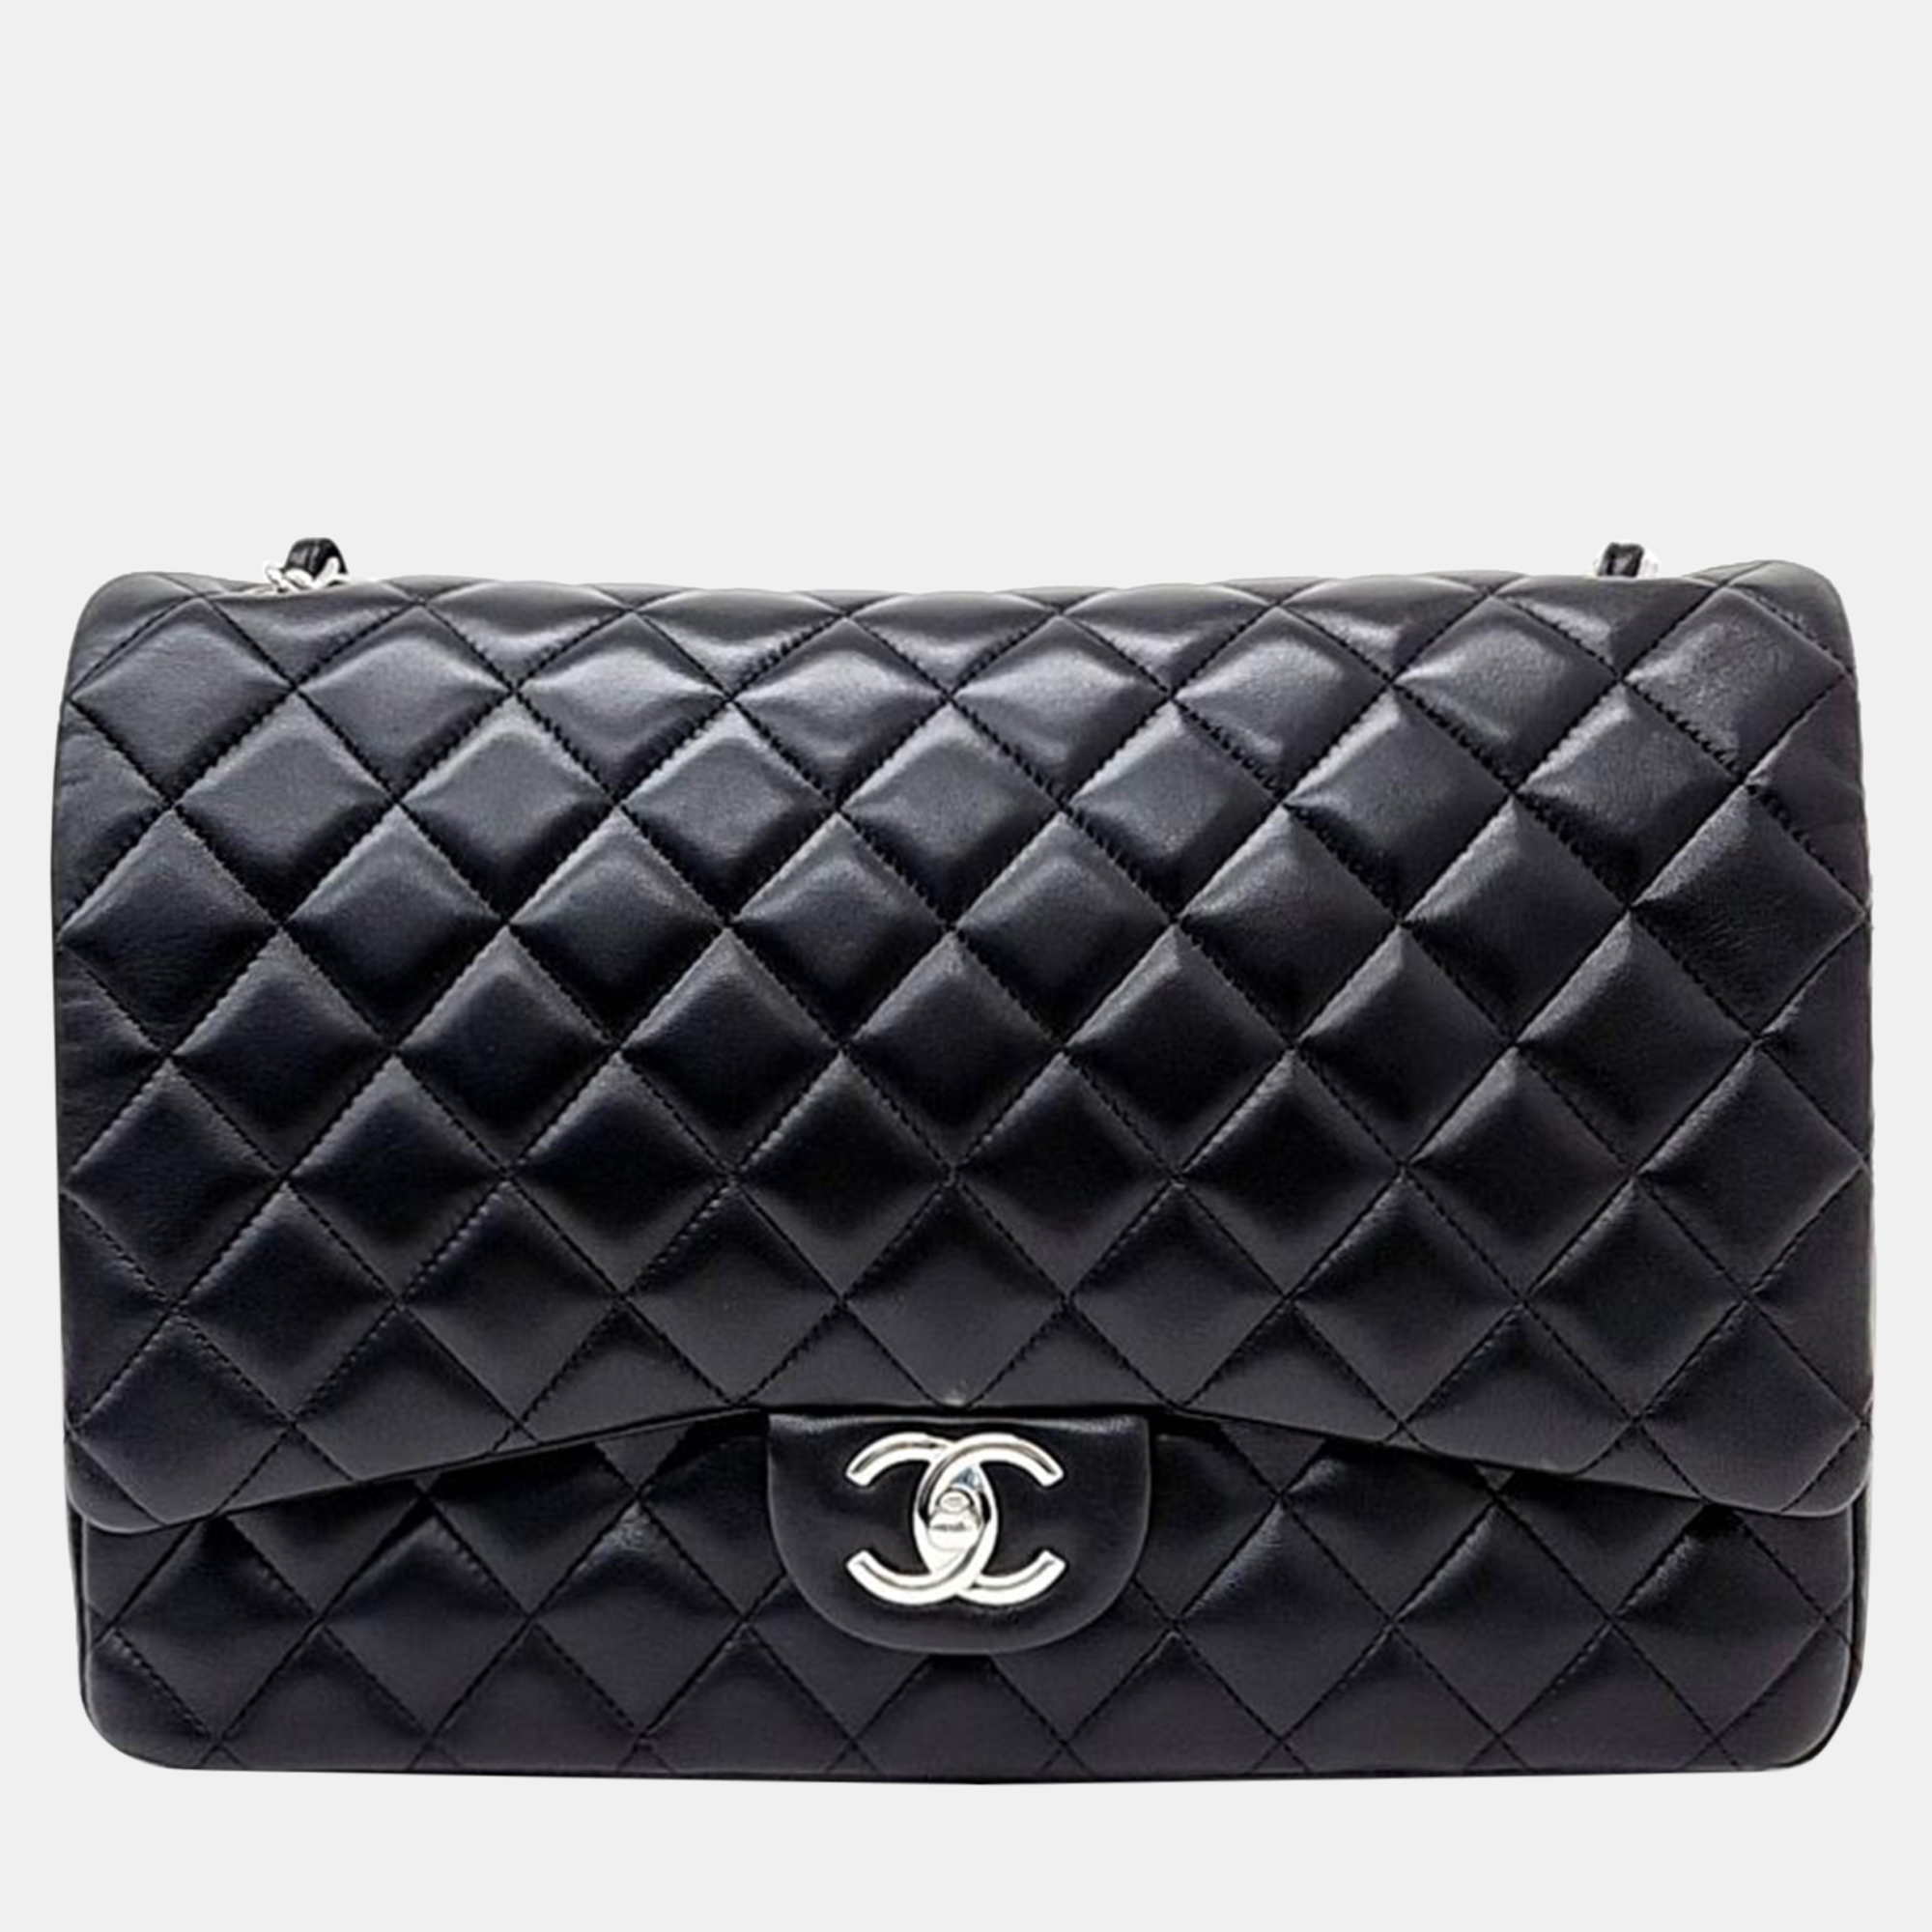 Chanel black leather classic maxi bag